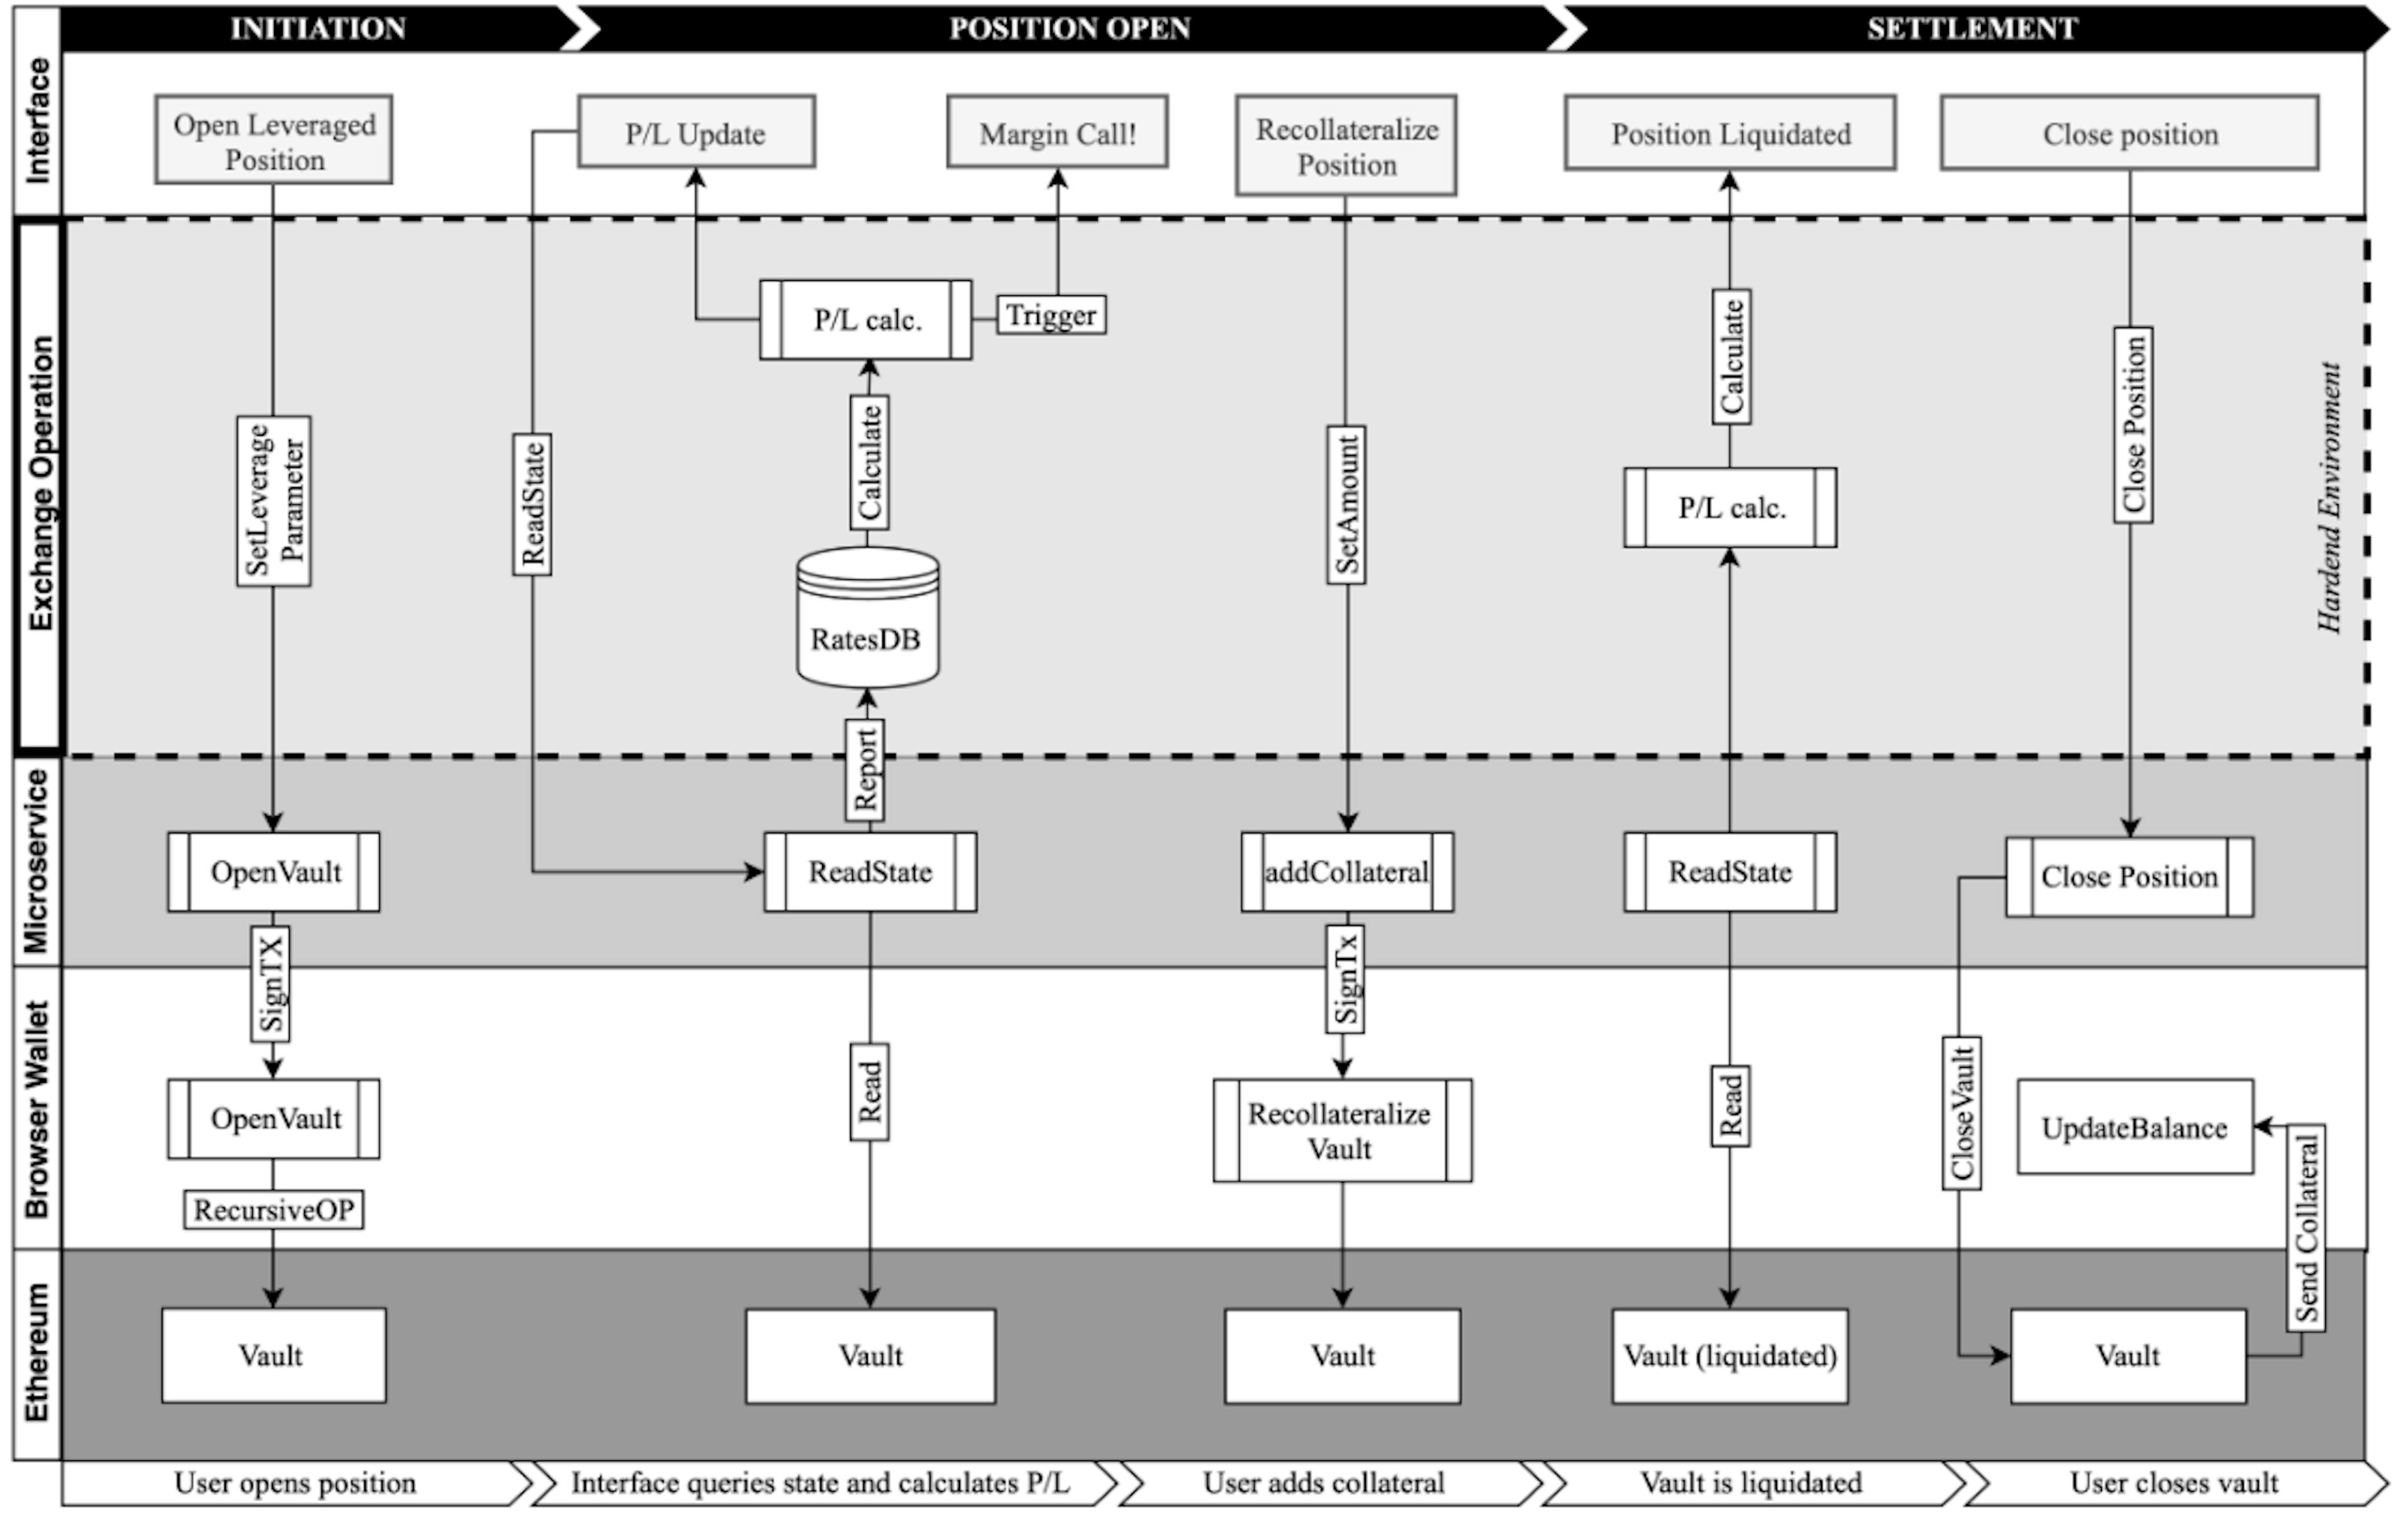 Figure 2. Integration taxonomy emphasizing key operations